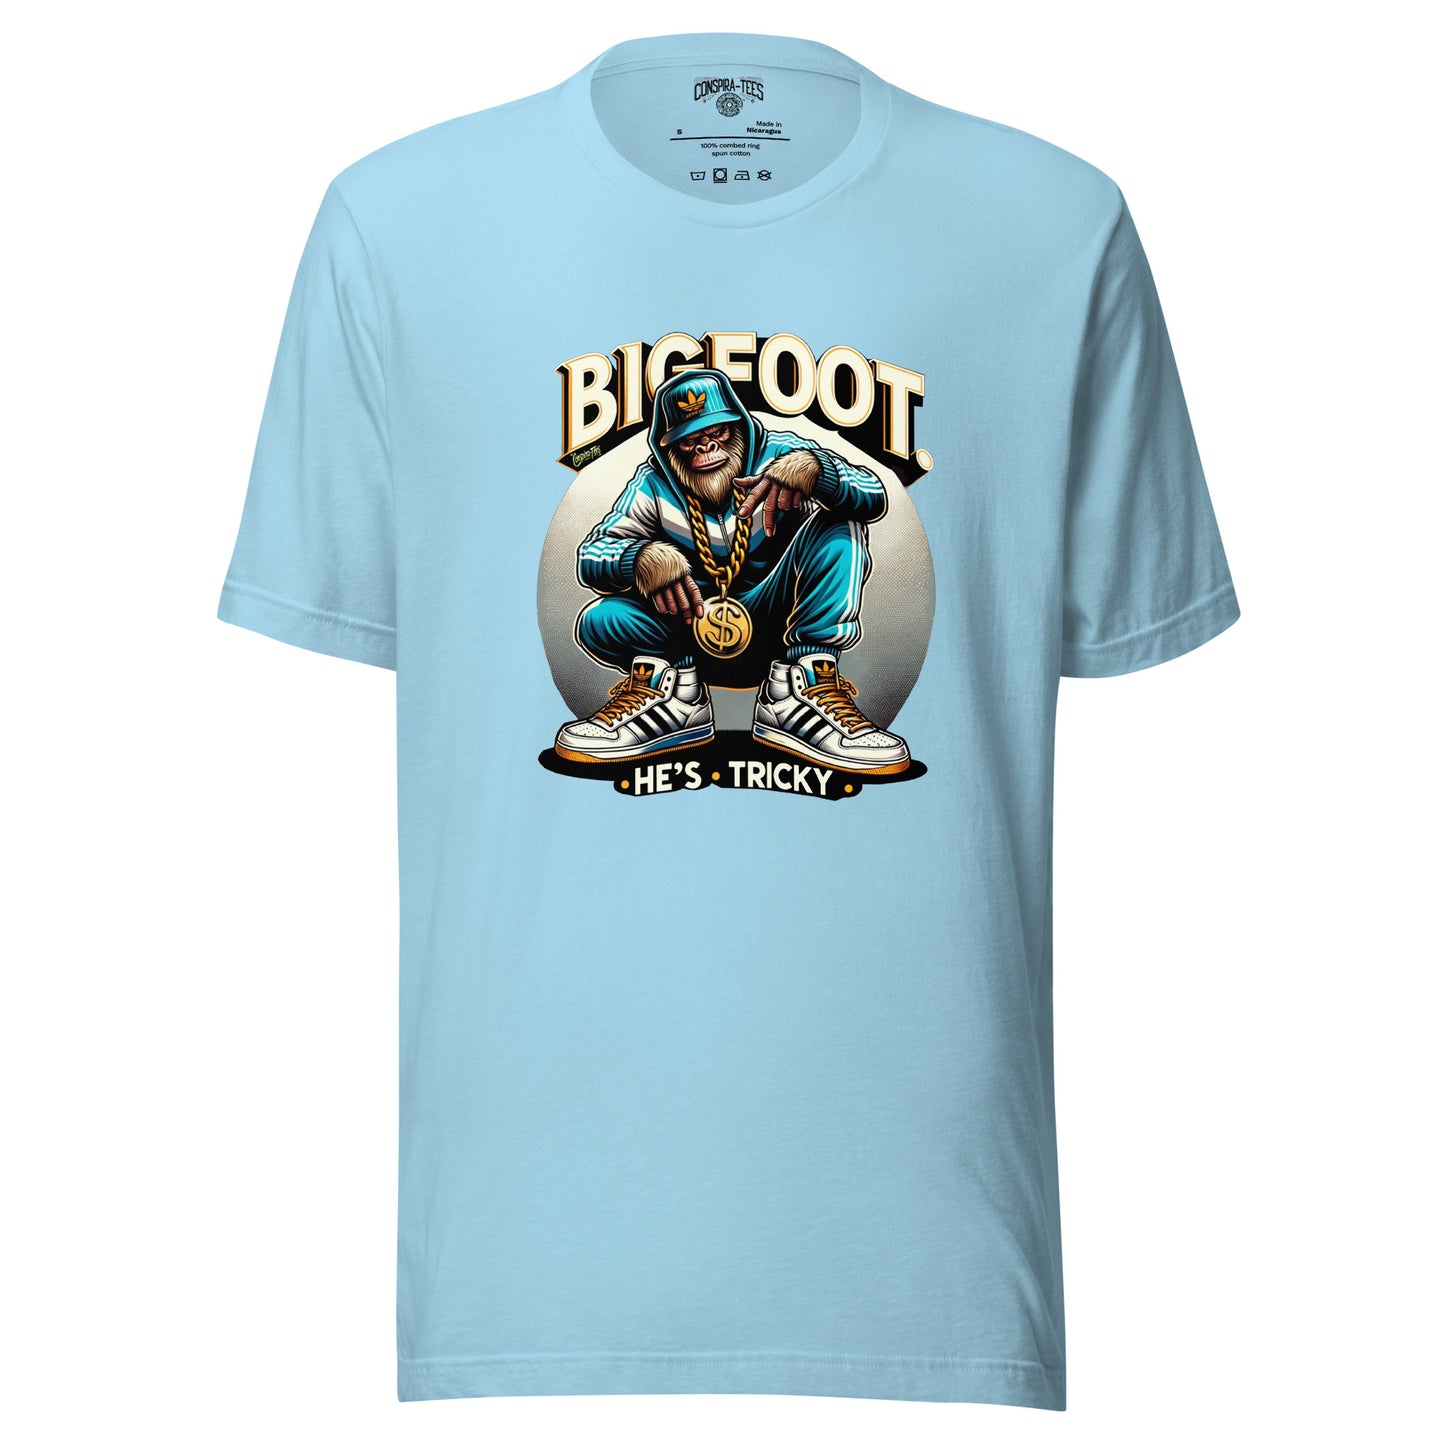 Bigfoot He's Tricky Unisex t-shirt